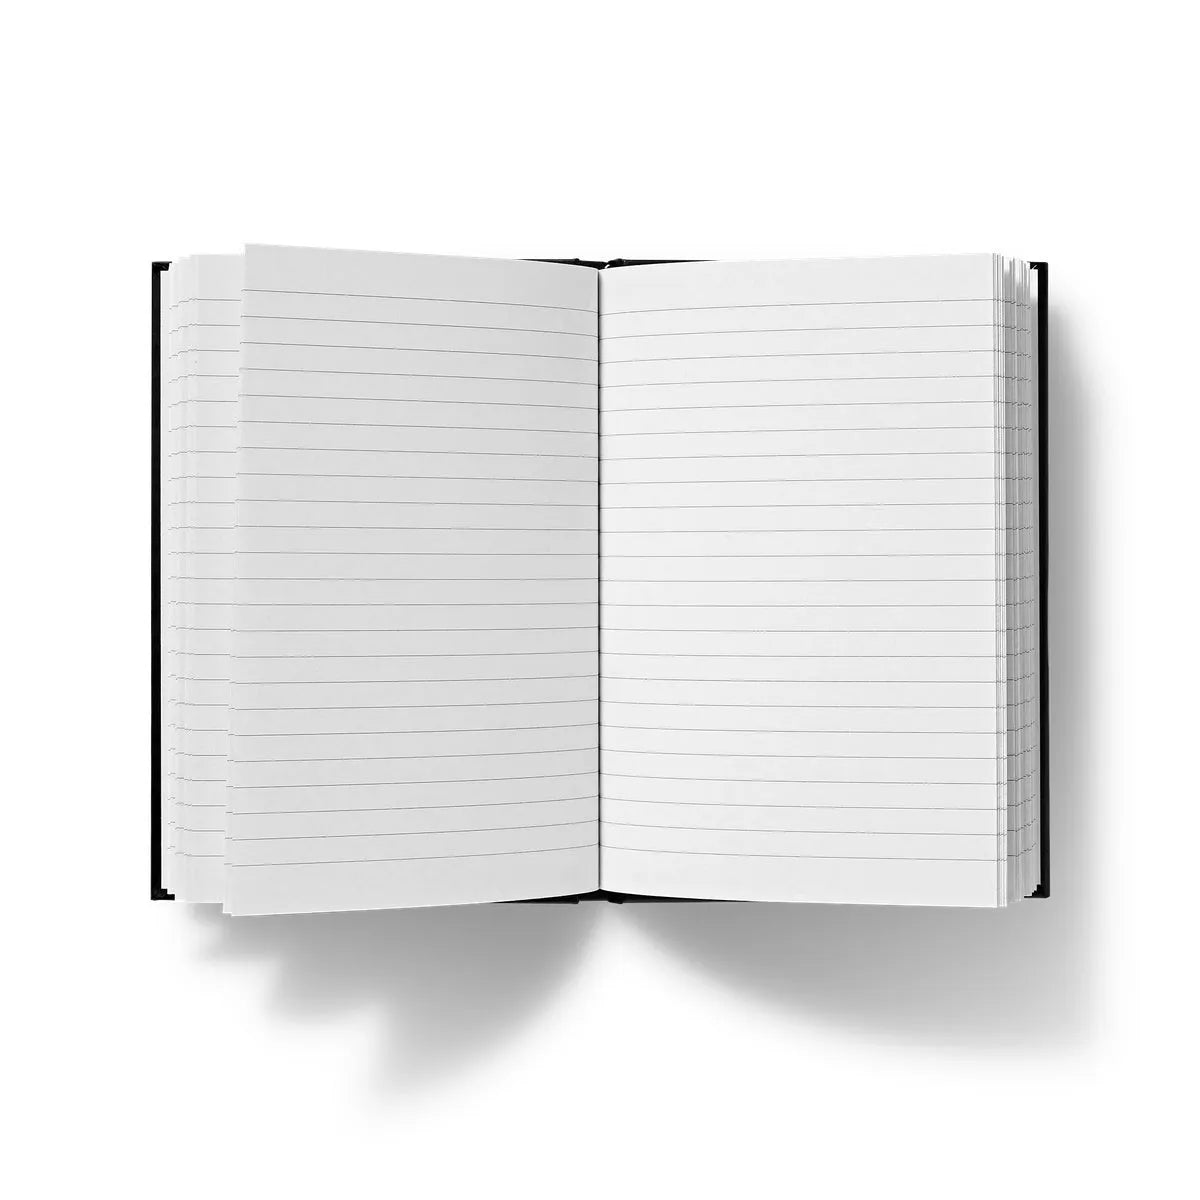 Honeysuckle 3 By William Morris Hardback Journal - Notebooks & Notepads - Aesthetic Art